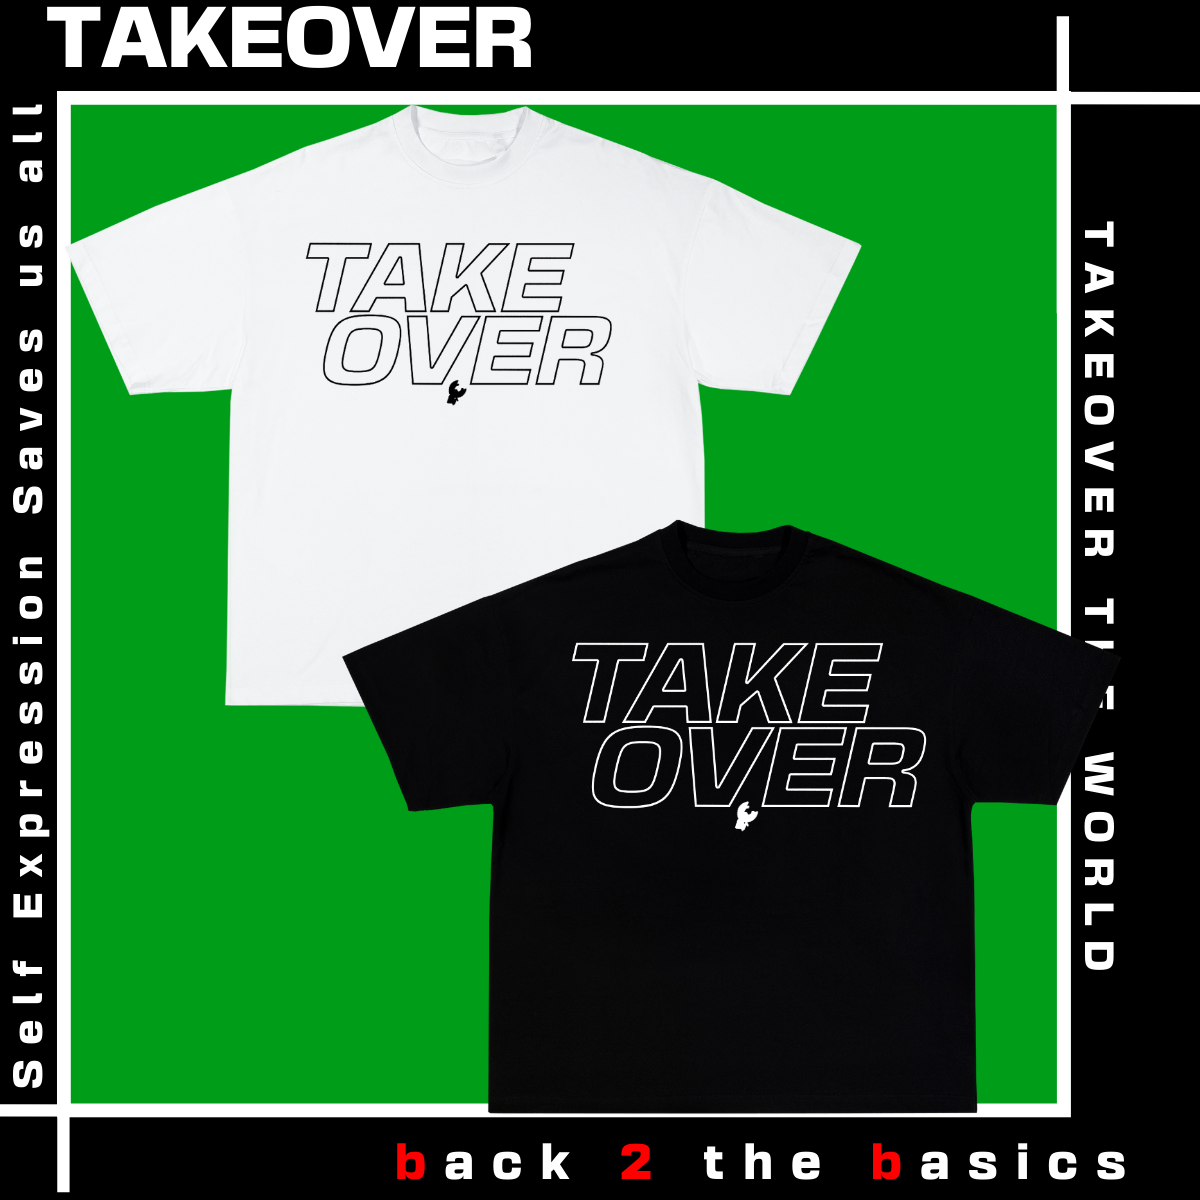 TAKEOVER Outline Shirt